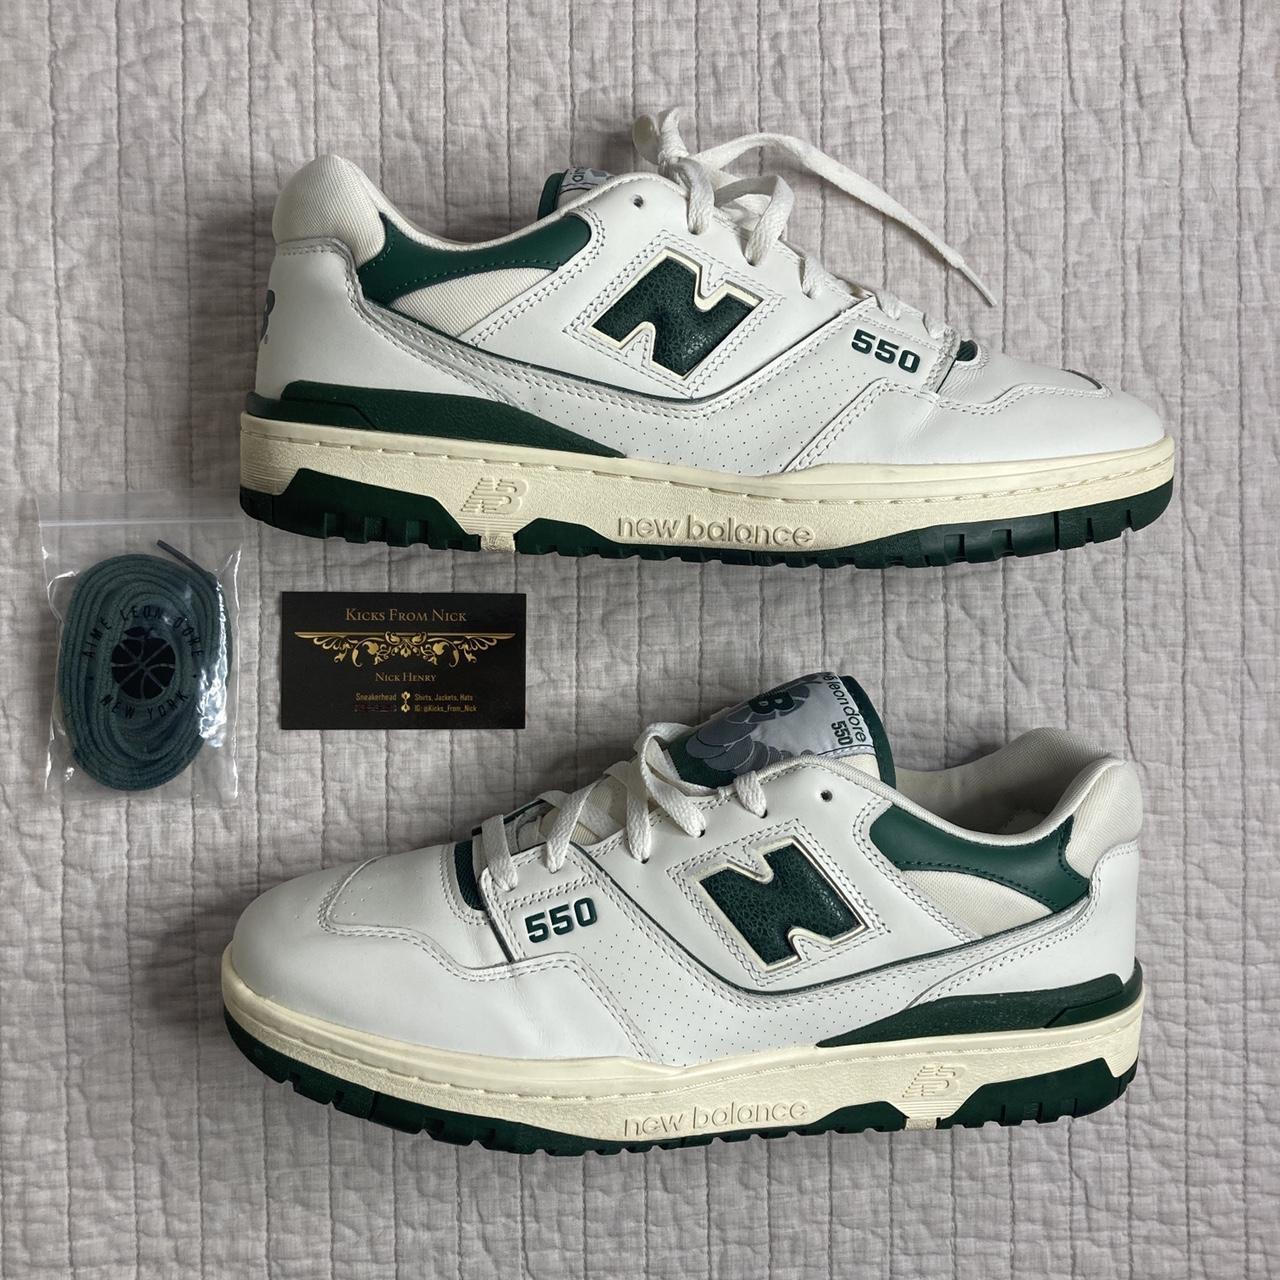 New Balance 550 (White/Green) 13